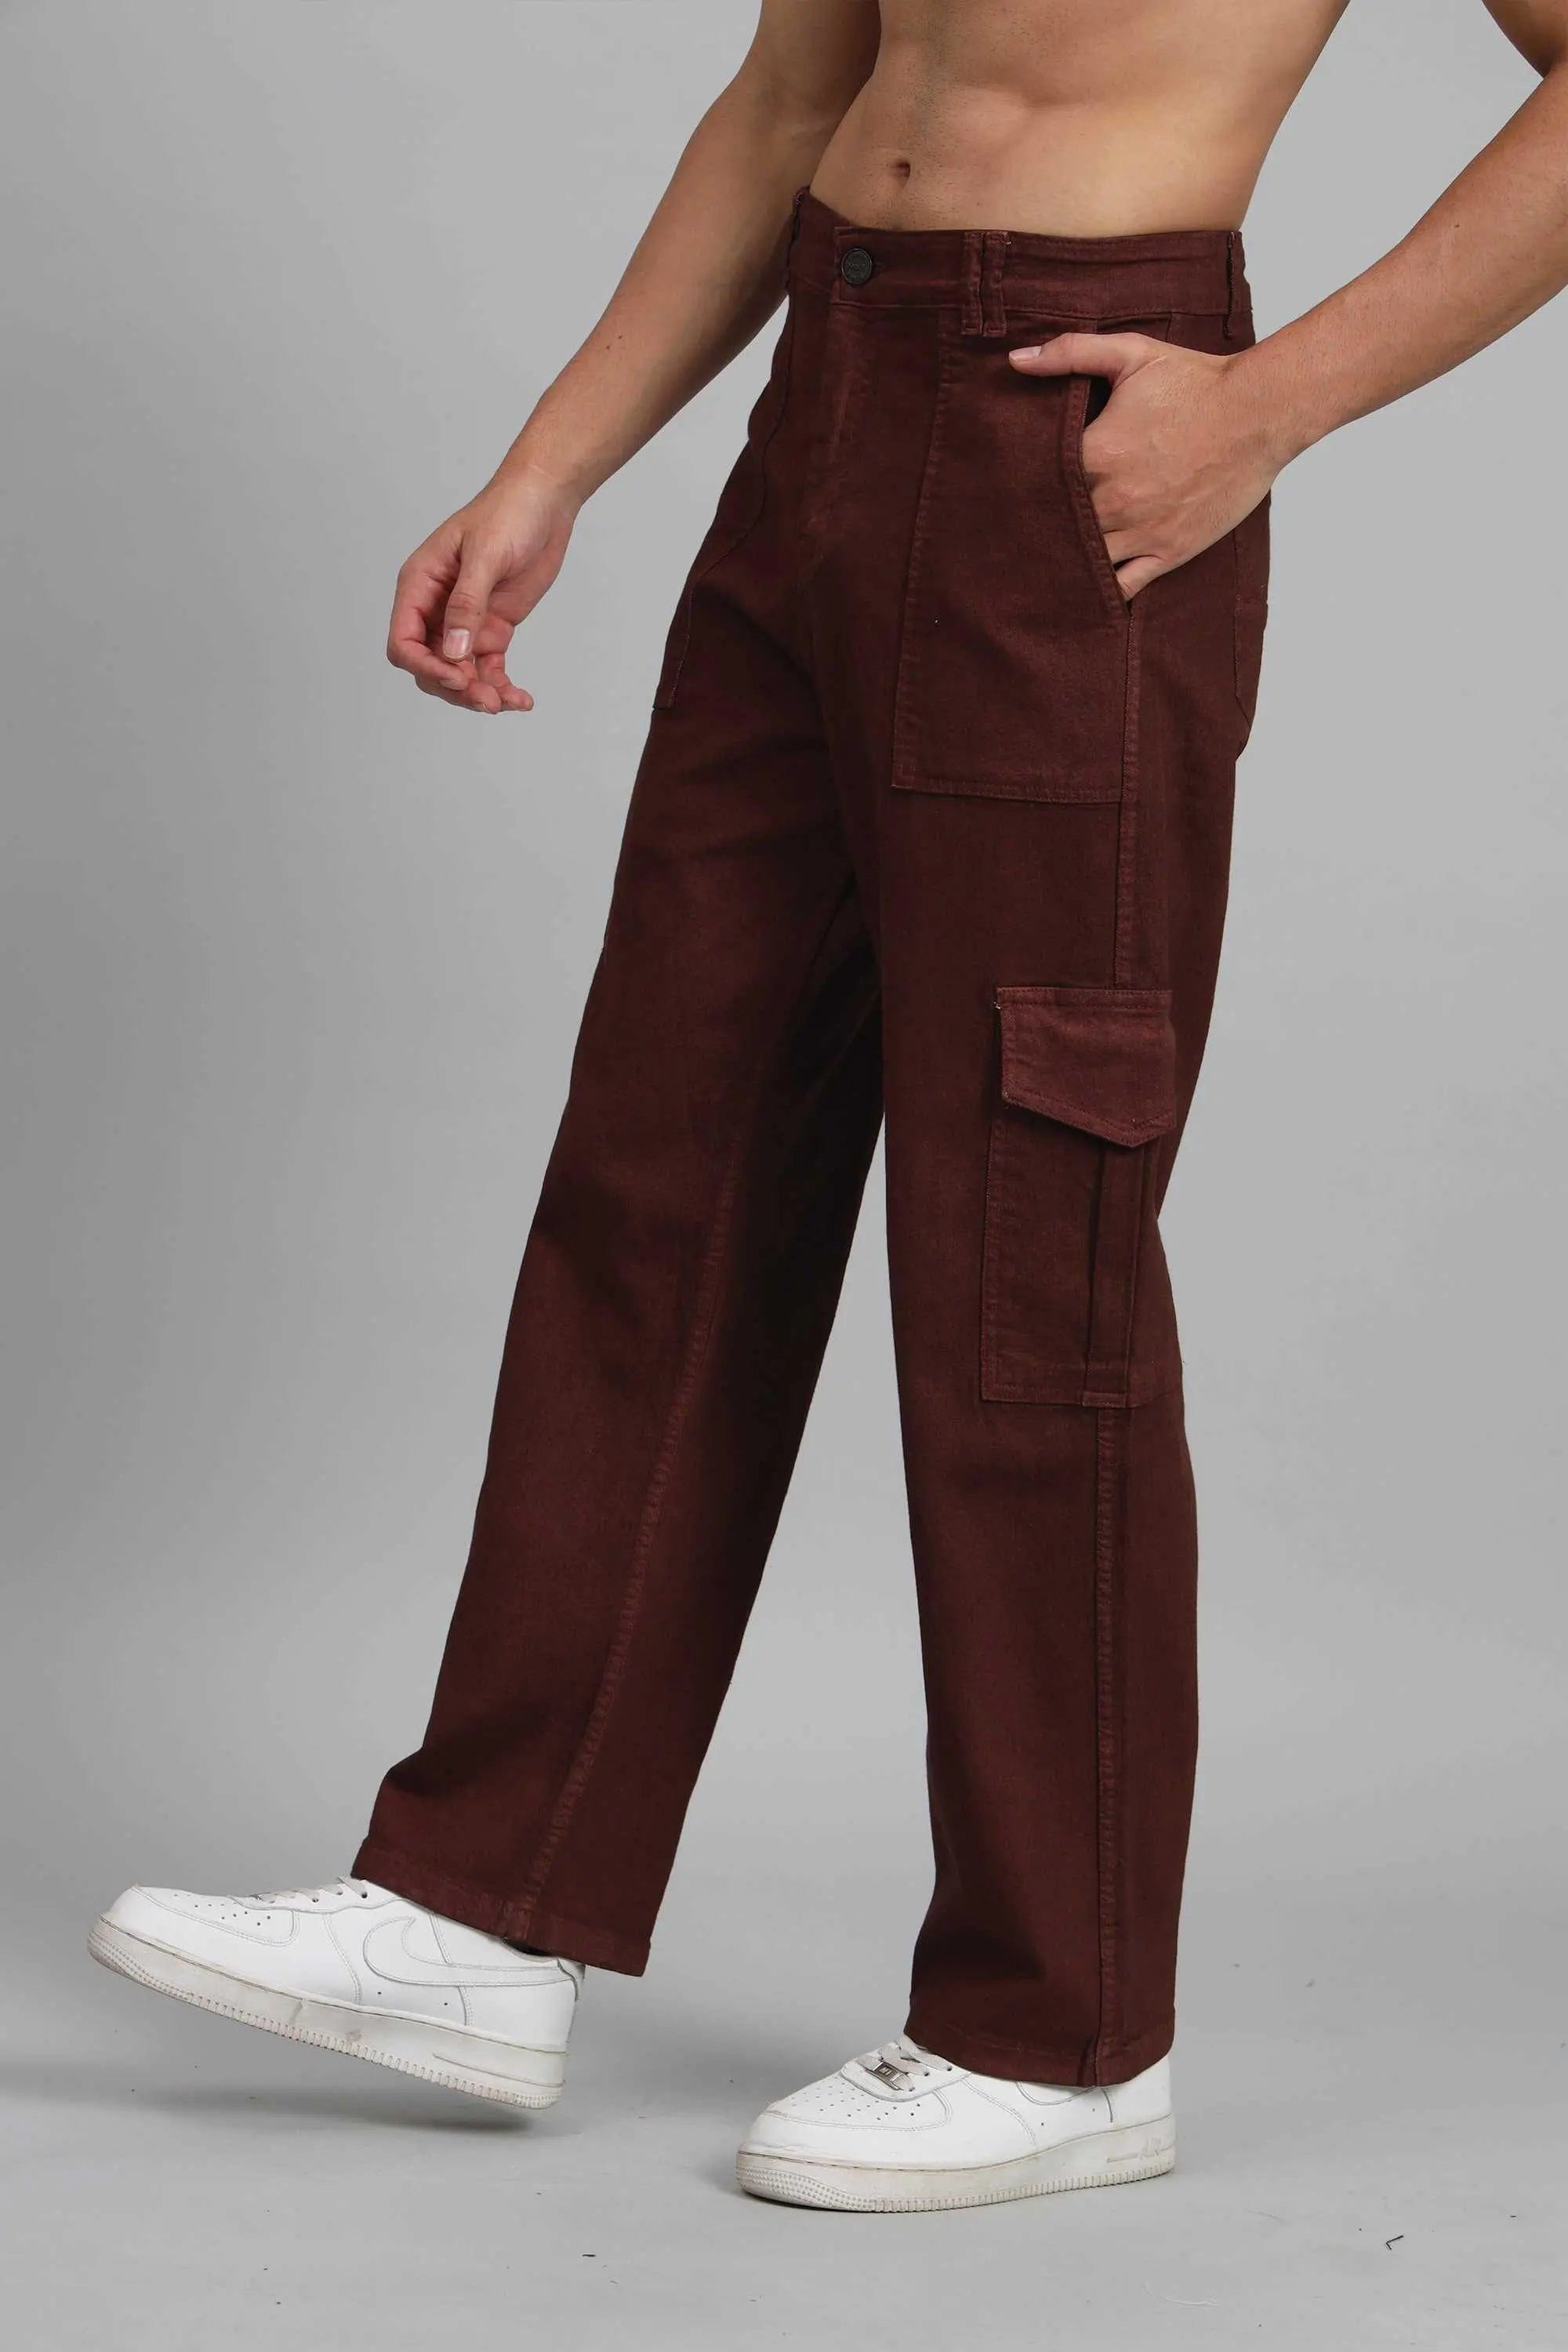 Women & Girls Denim Cargo Jeans & Pants Jogger Style Slim Fit Trouser